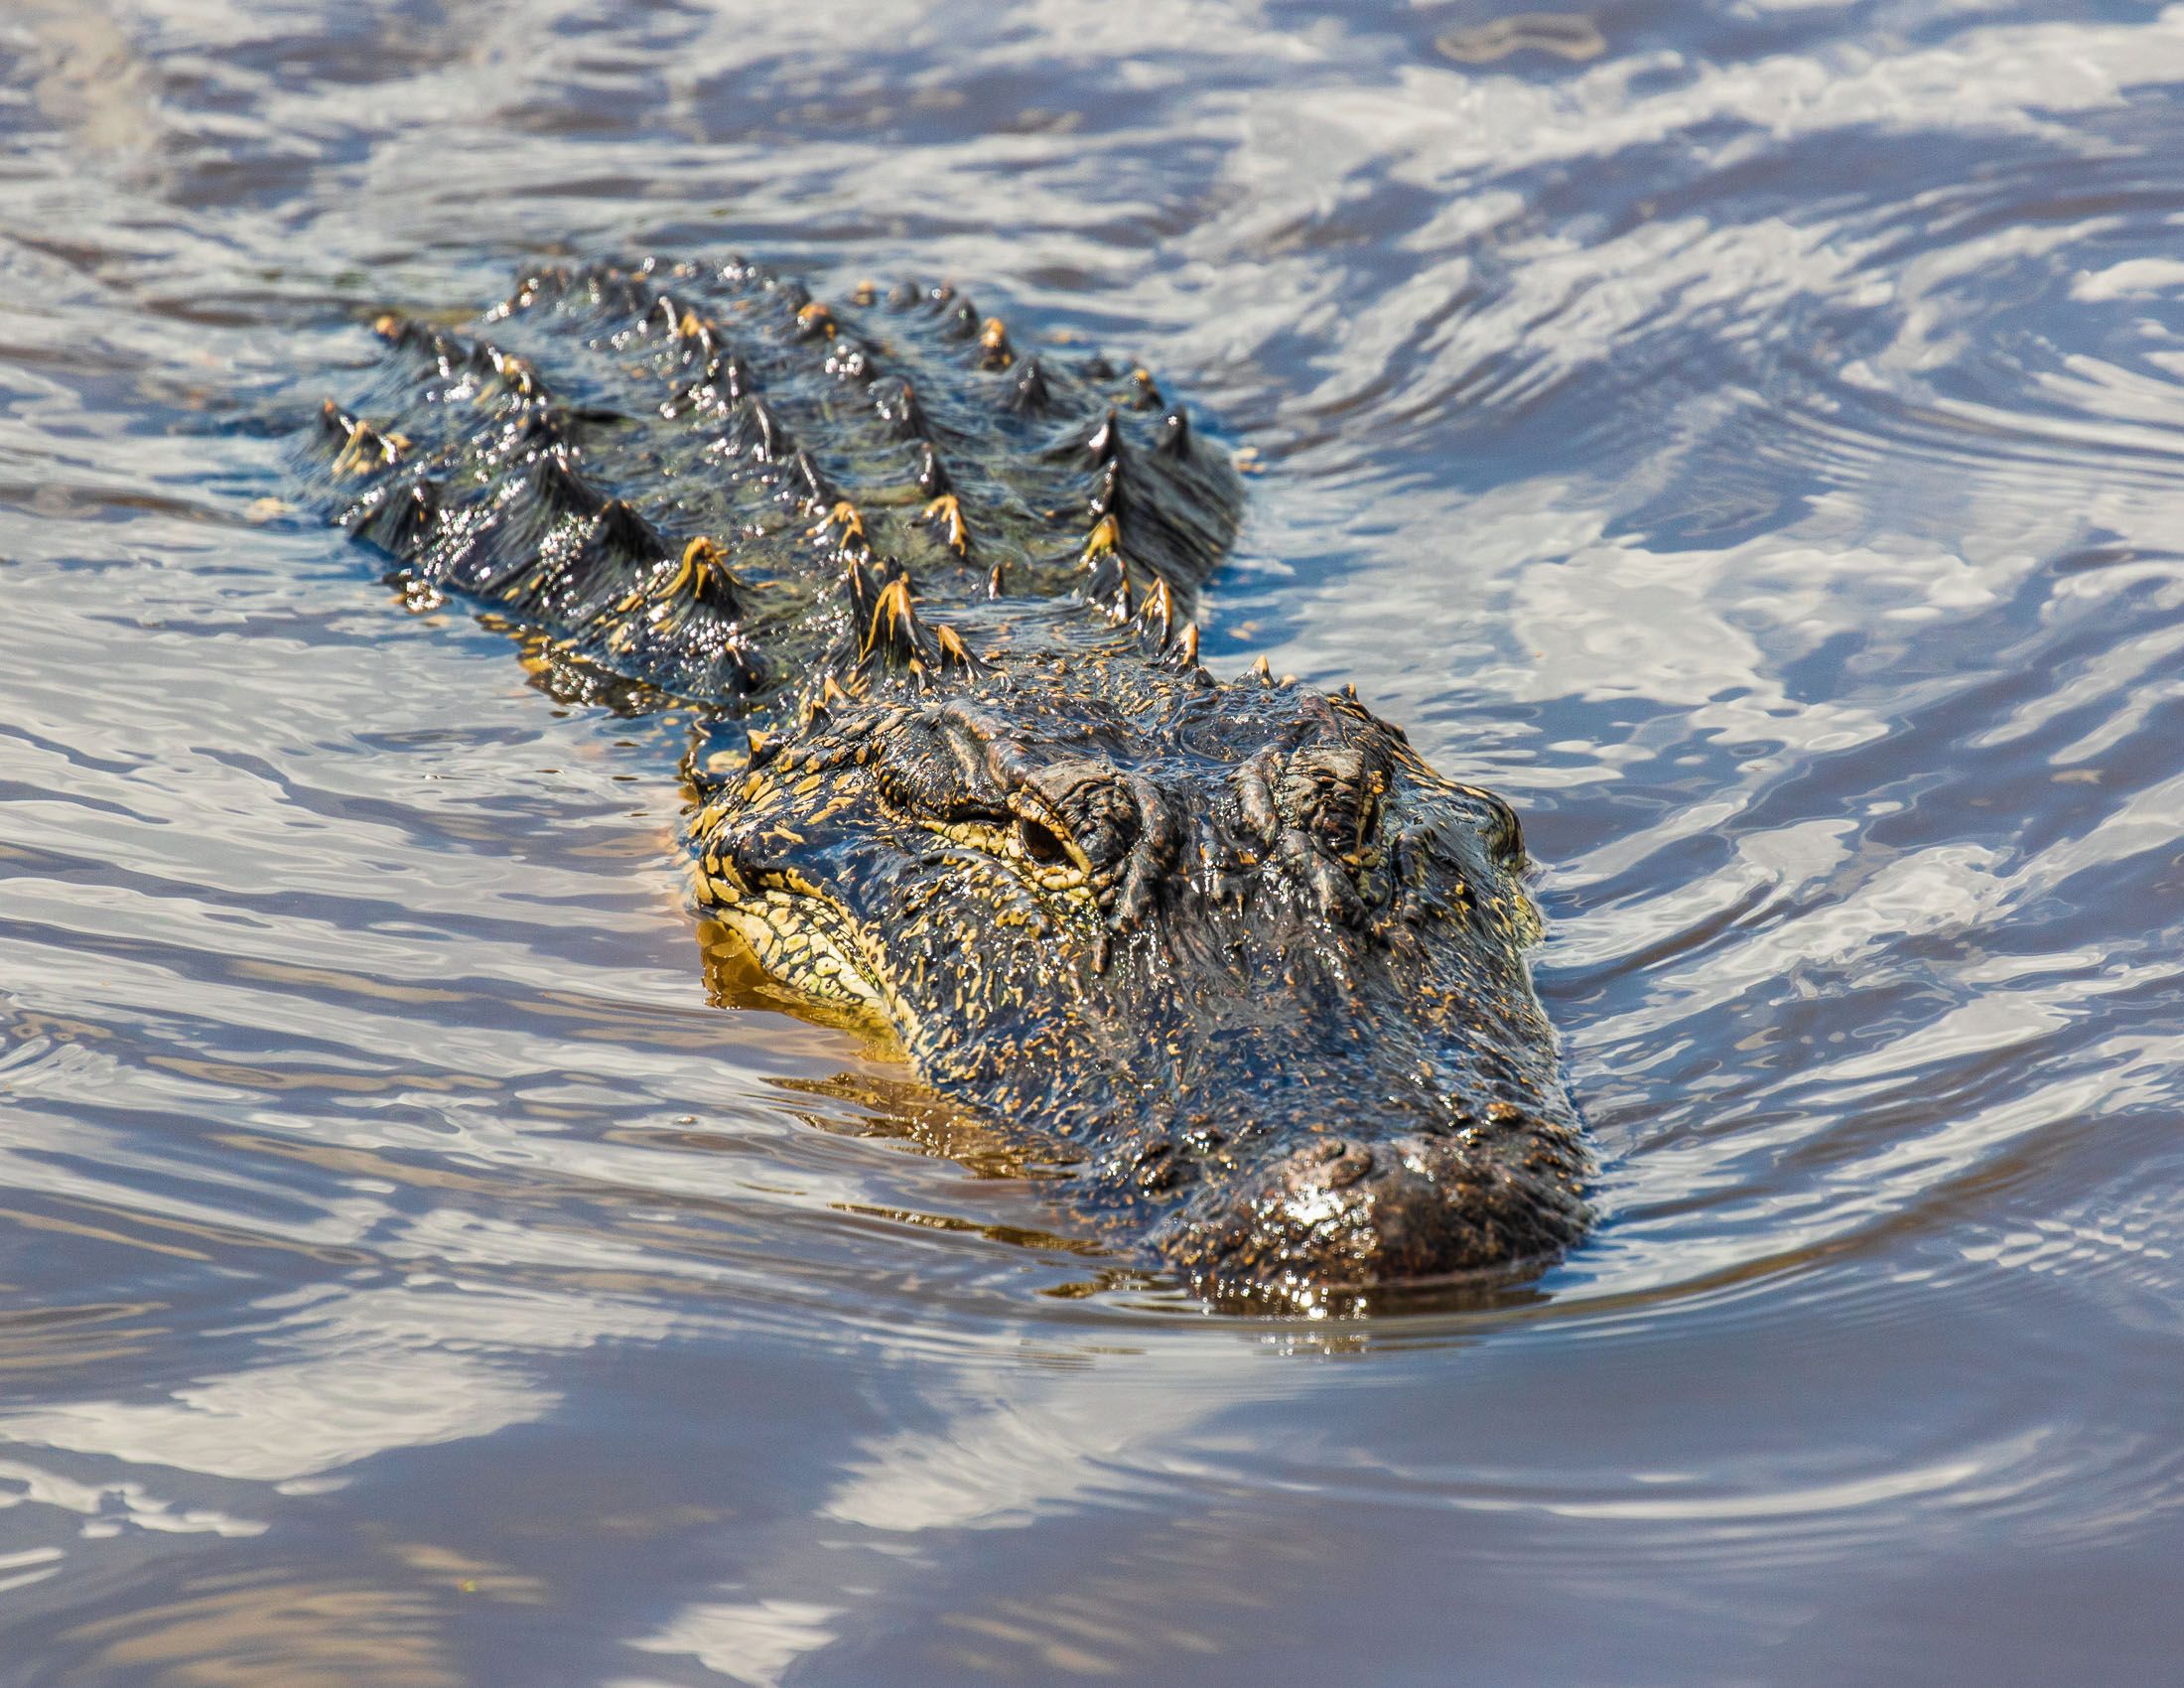 Alligators of Ace Basin, South Carolina-2.jpg